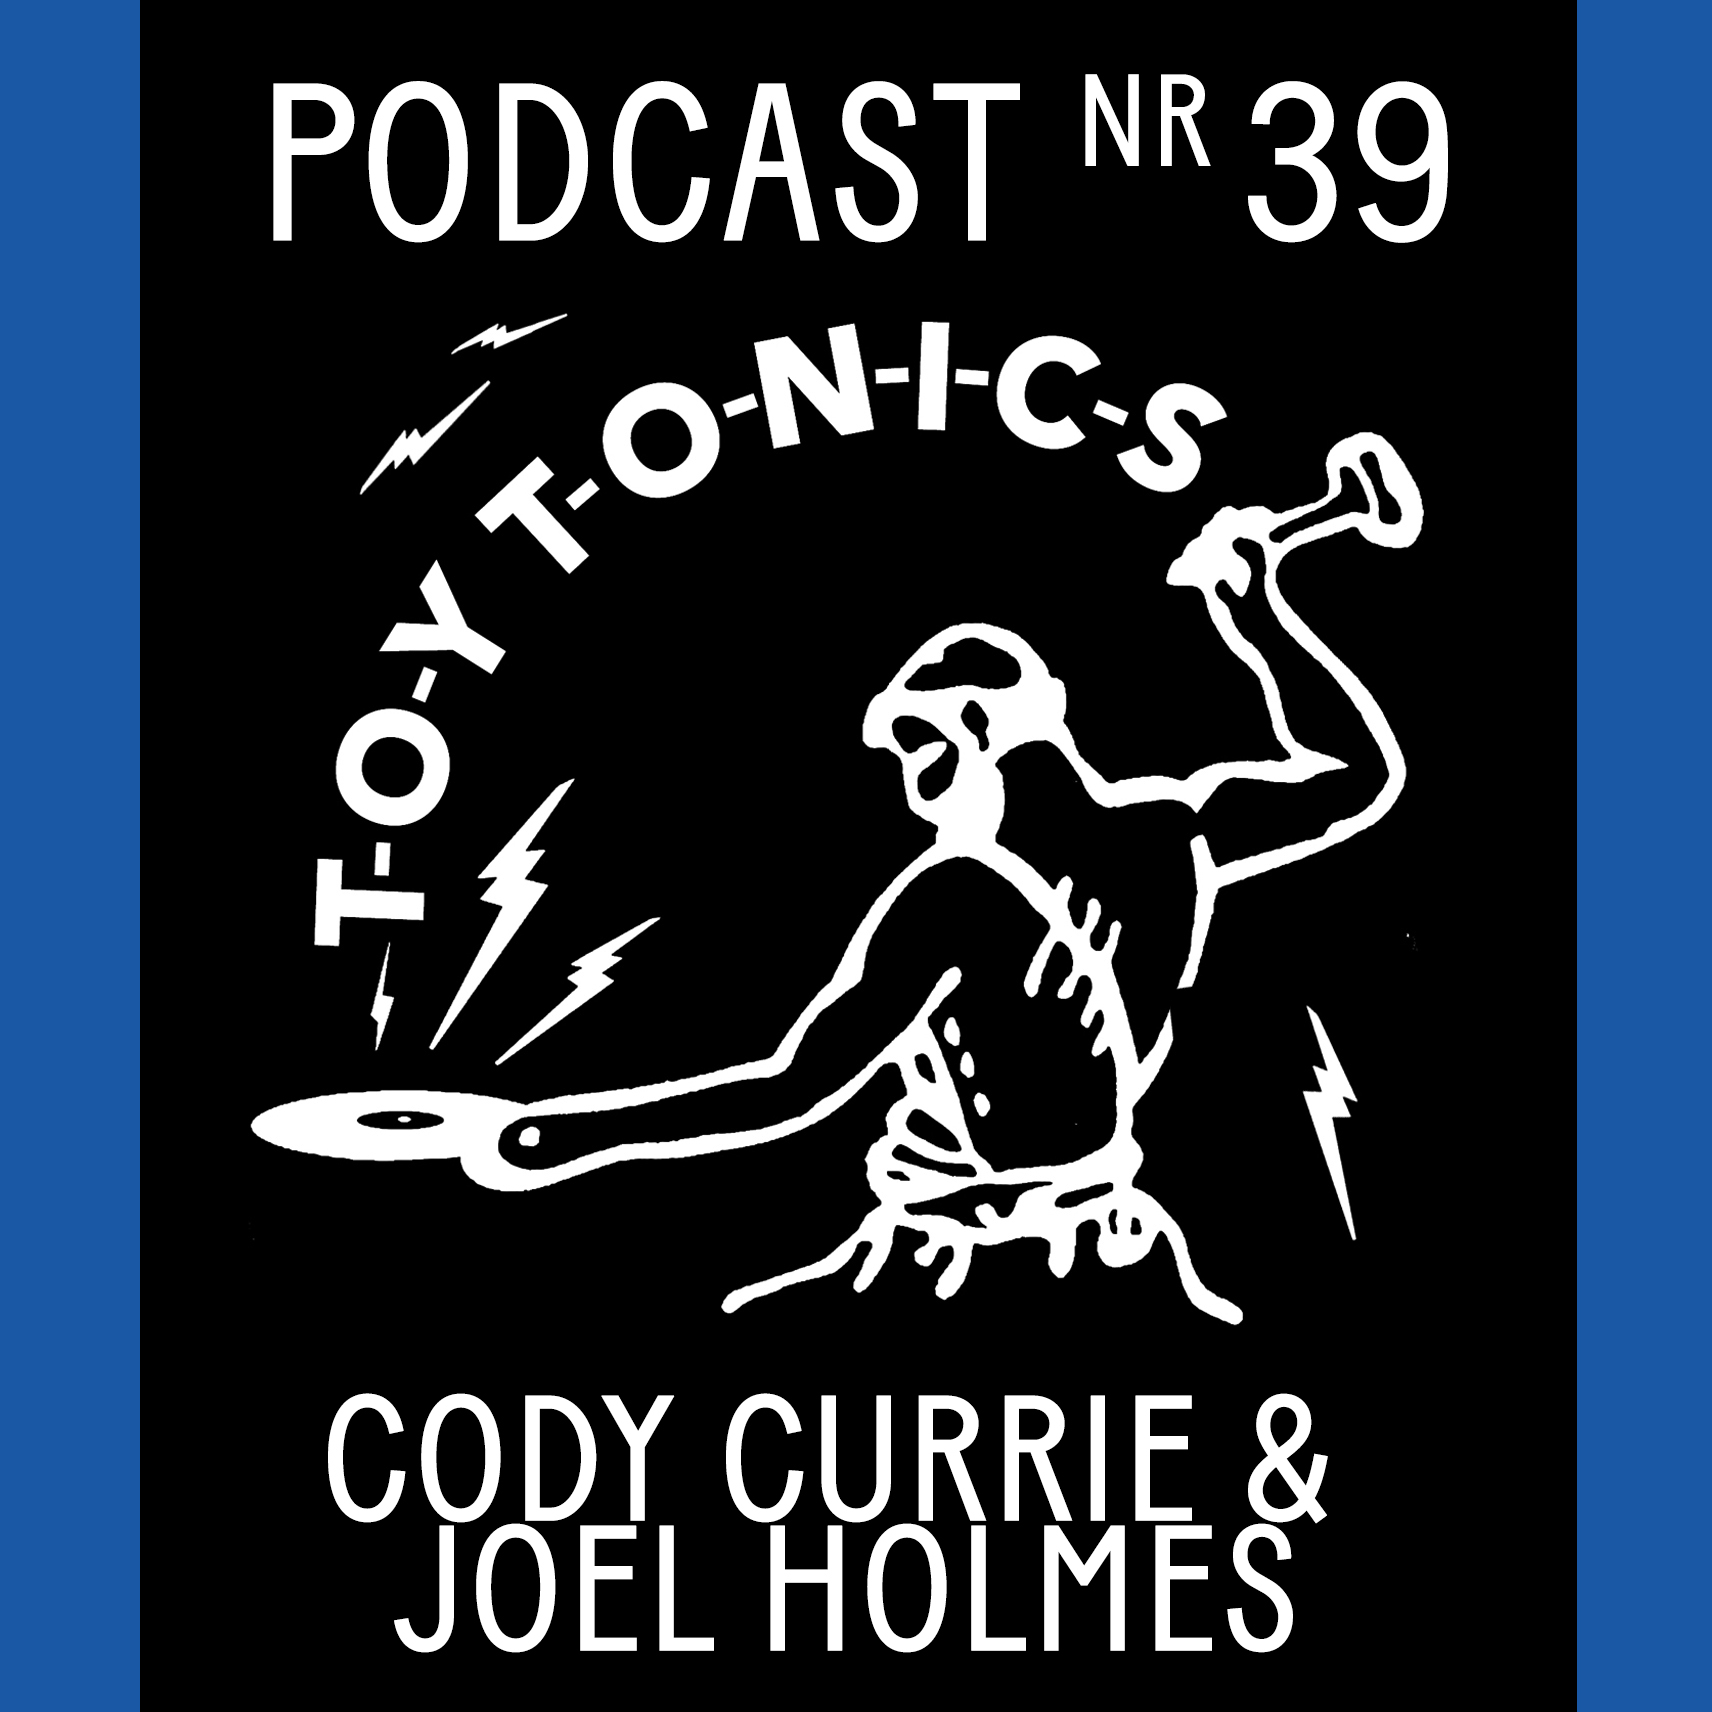 PODCAST NR 39 - Cody Currie & Joel Holmes